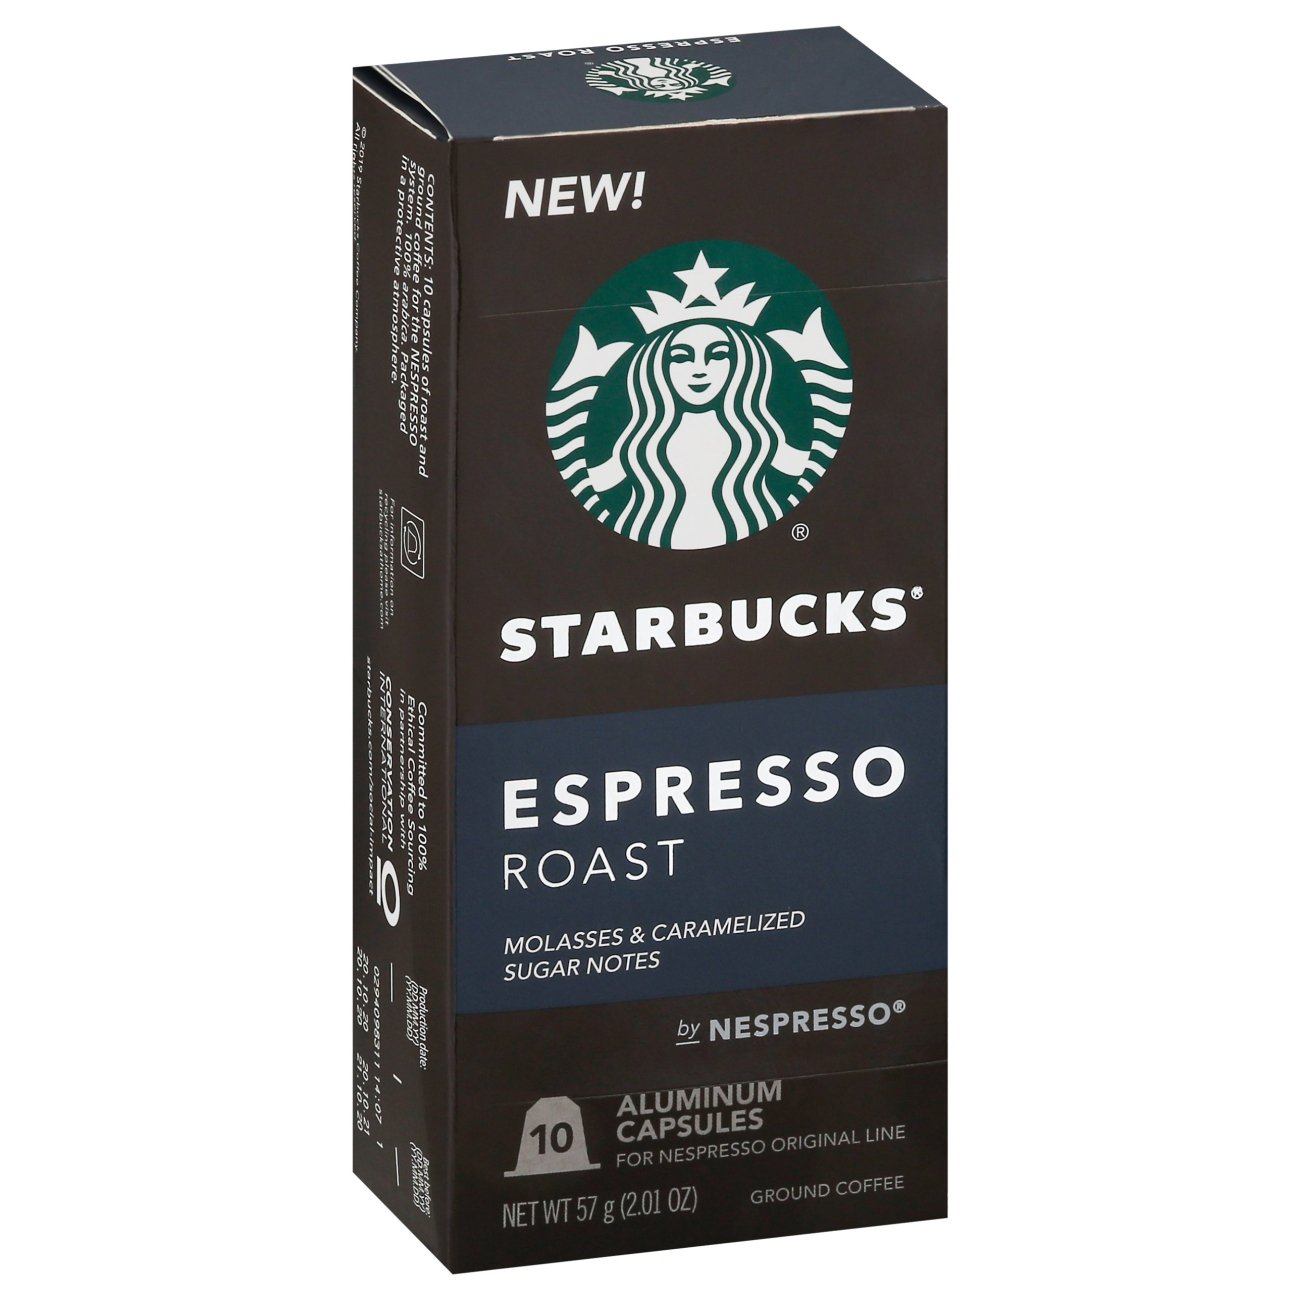 Starbucks Espresso Roast Nespresso Capsules - Shop Coffee at H-E-B